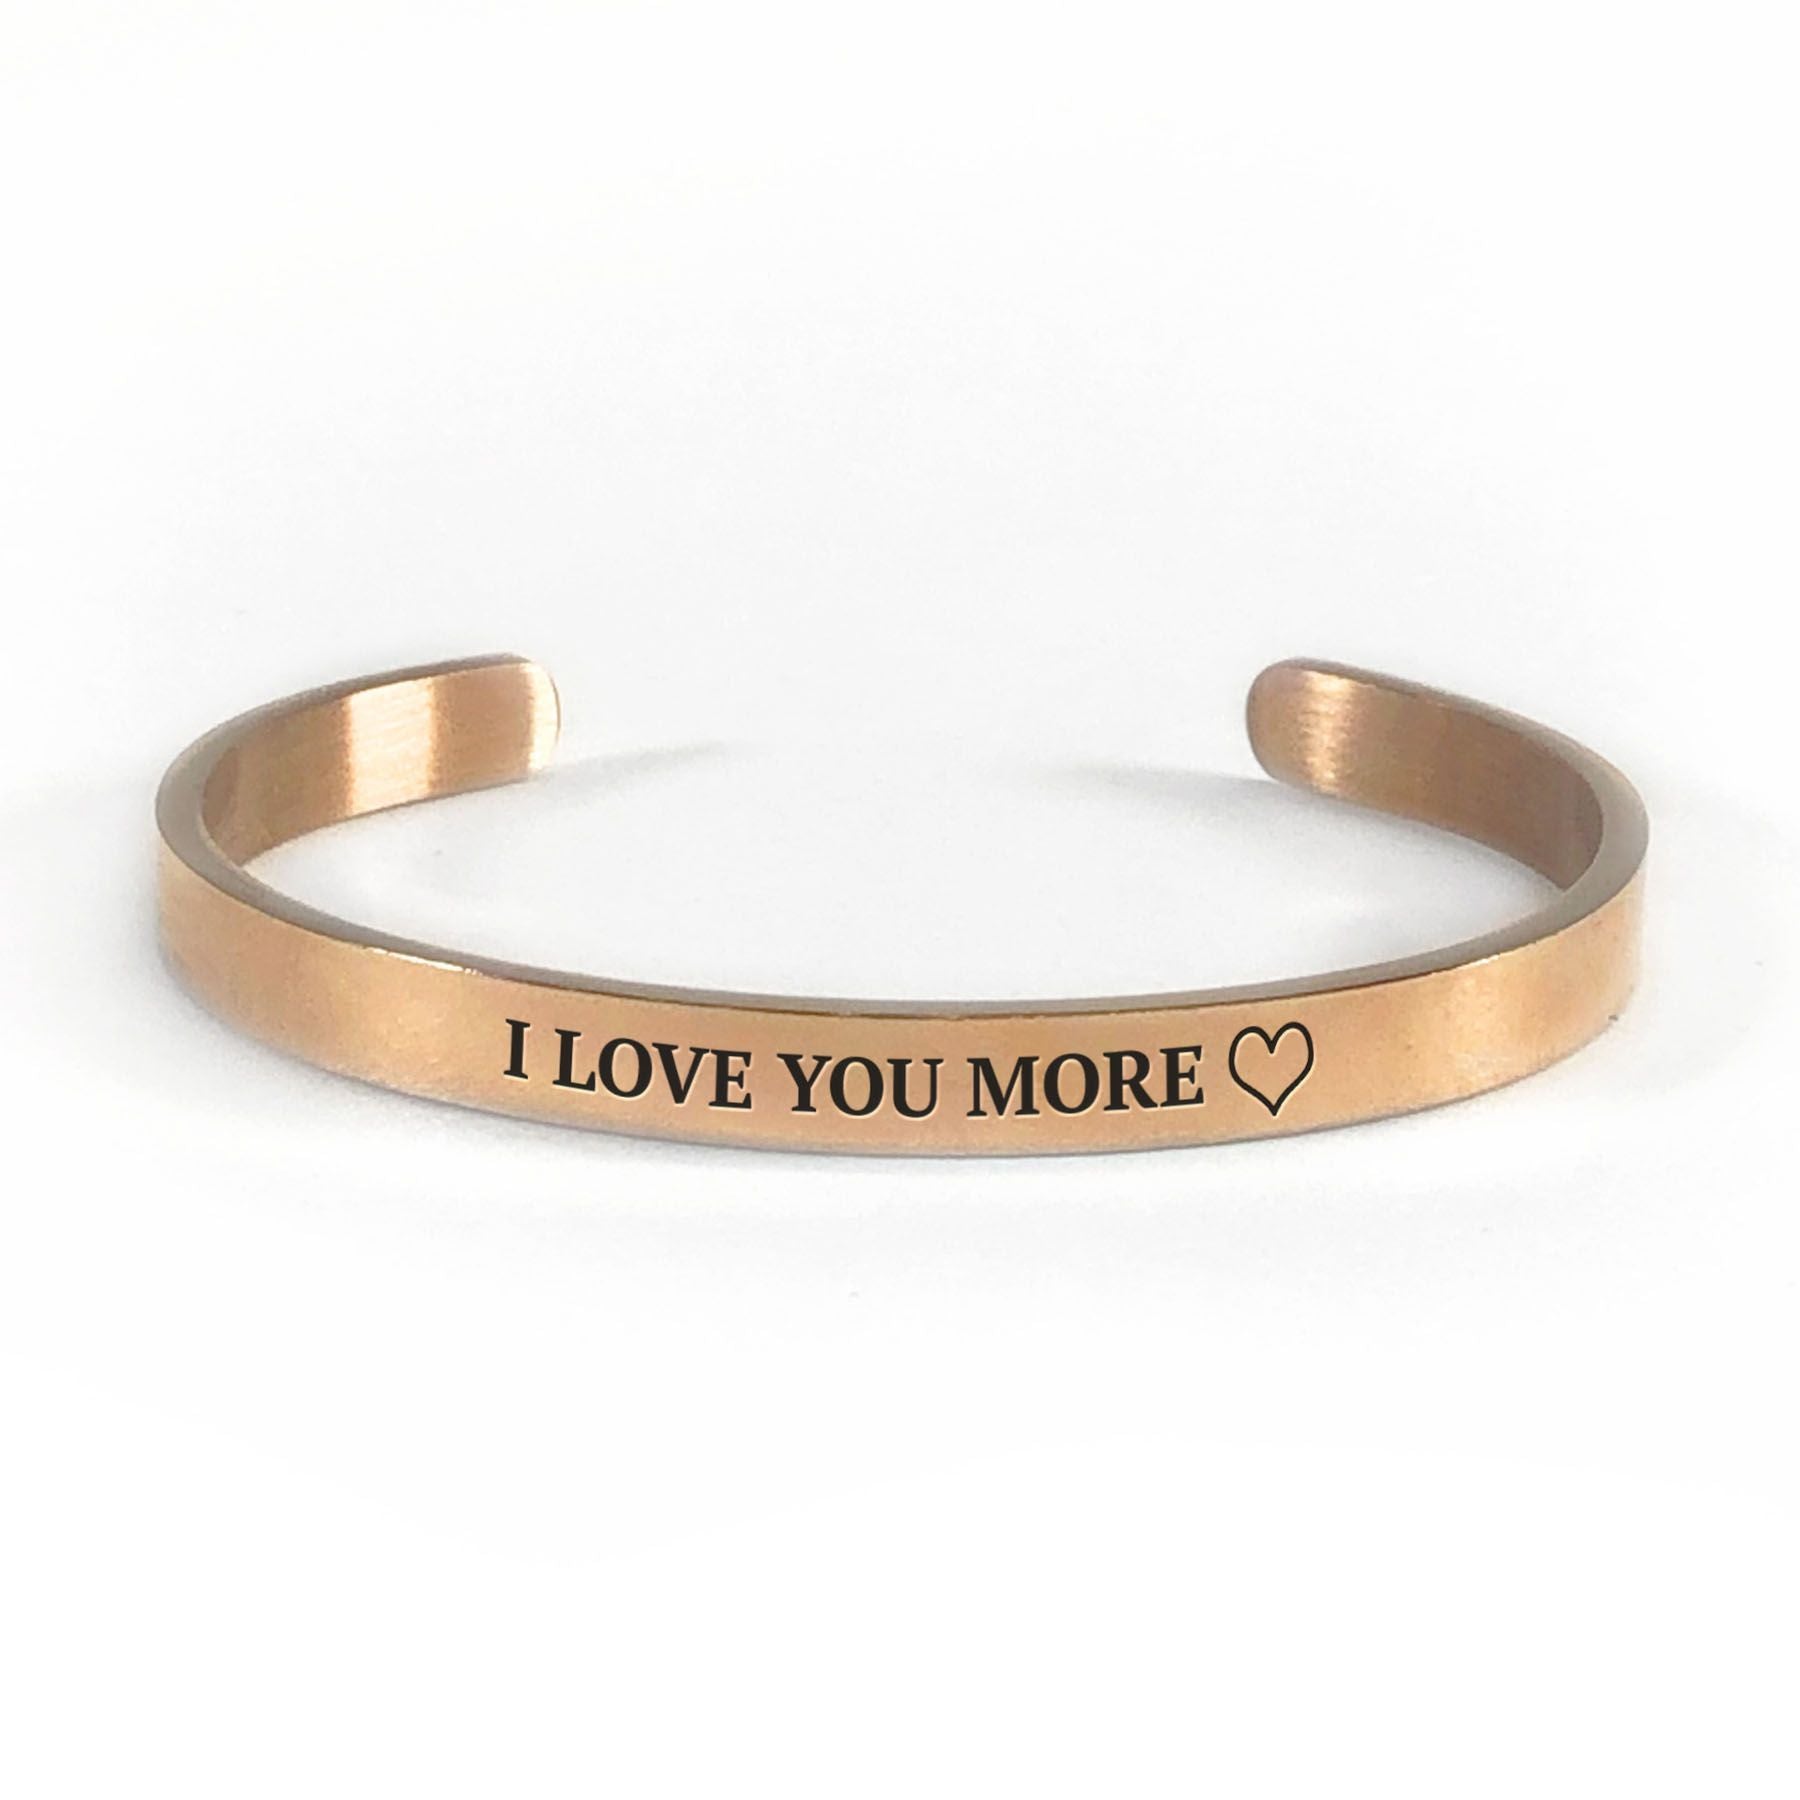 I love you more bracelet with rose gold plating